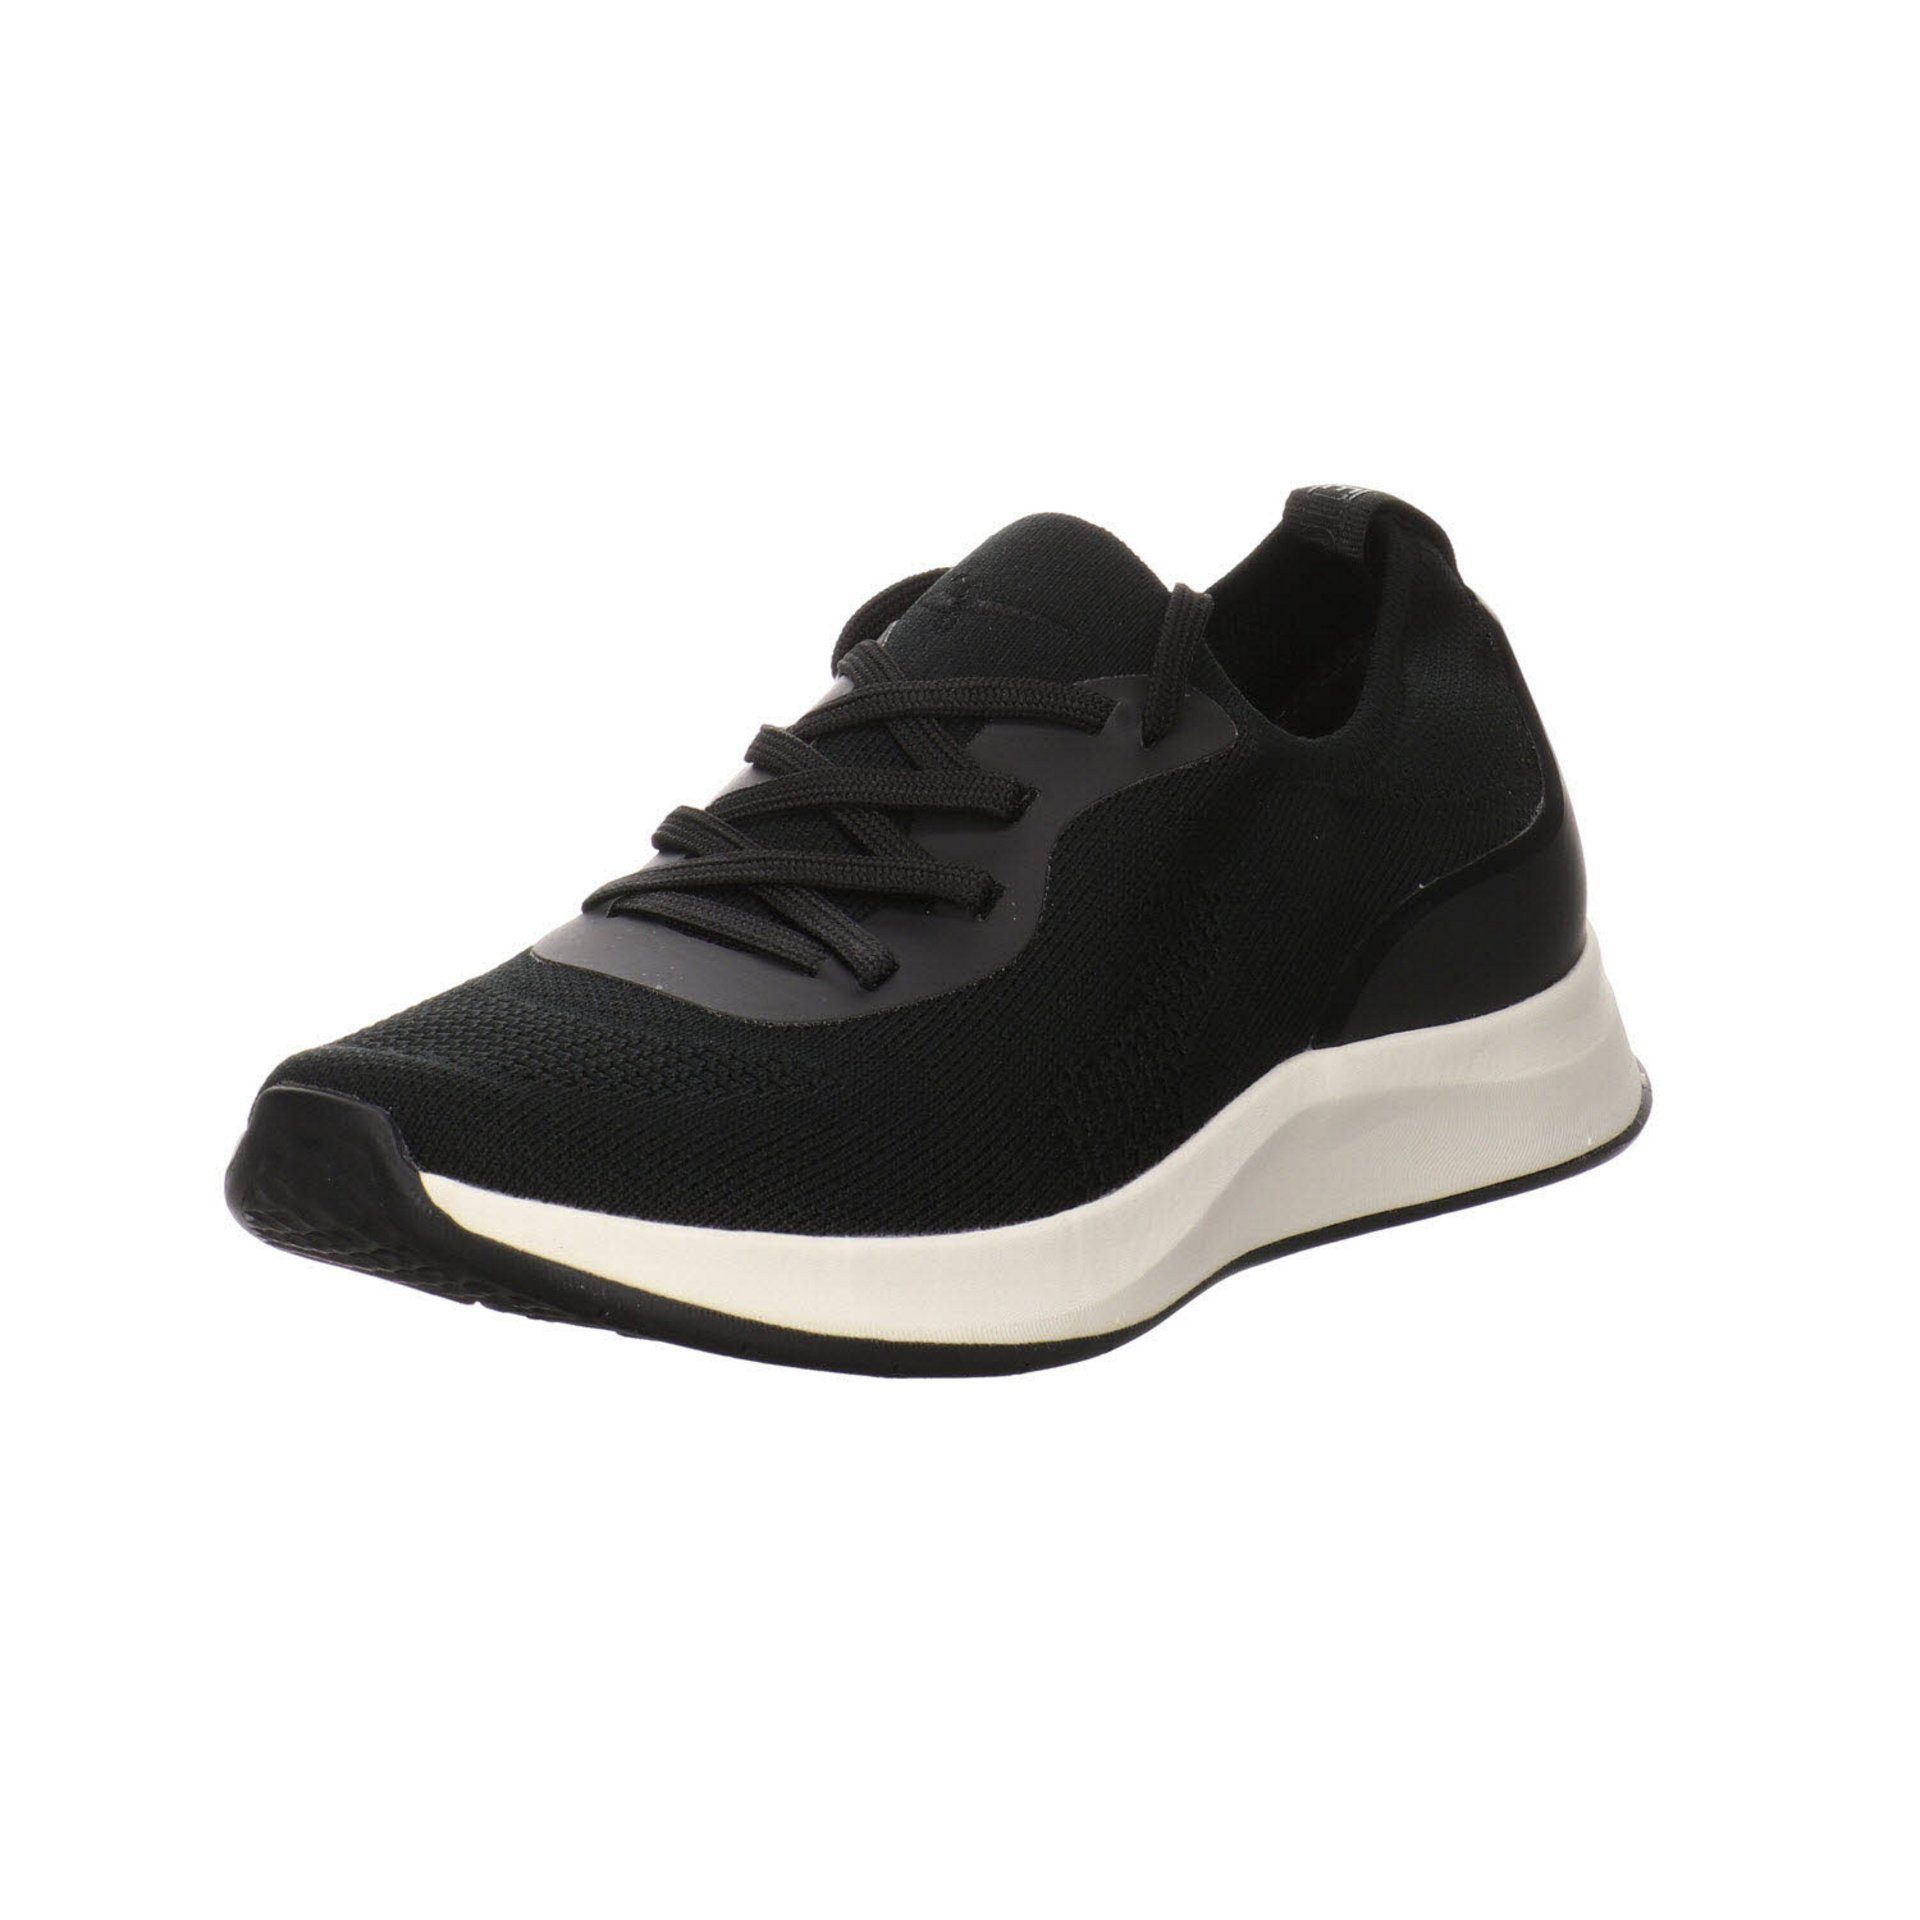 Tamaris Damen Sneaker Schuhe Slip-On Sneaker Sneaker Textil schwarz dunkel